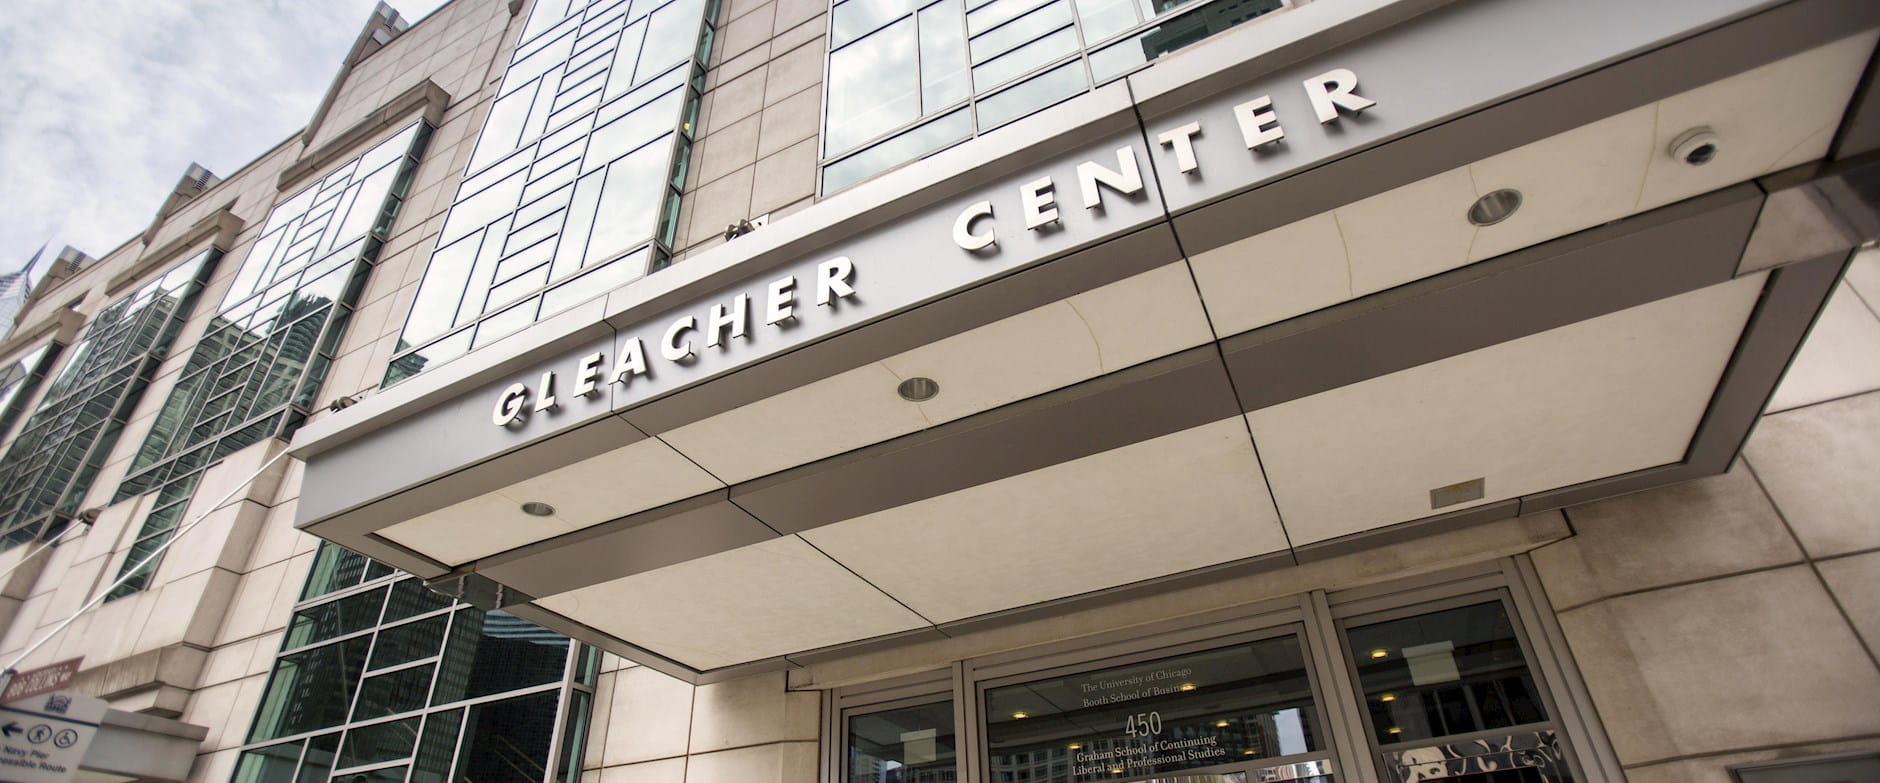 Gleacher Center: Conference and Events Center - Gleacher Center